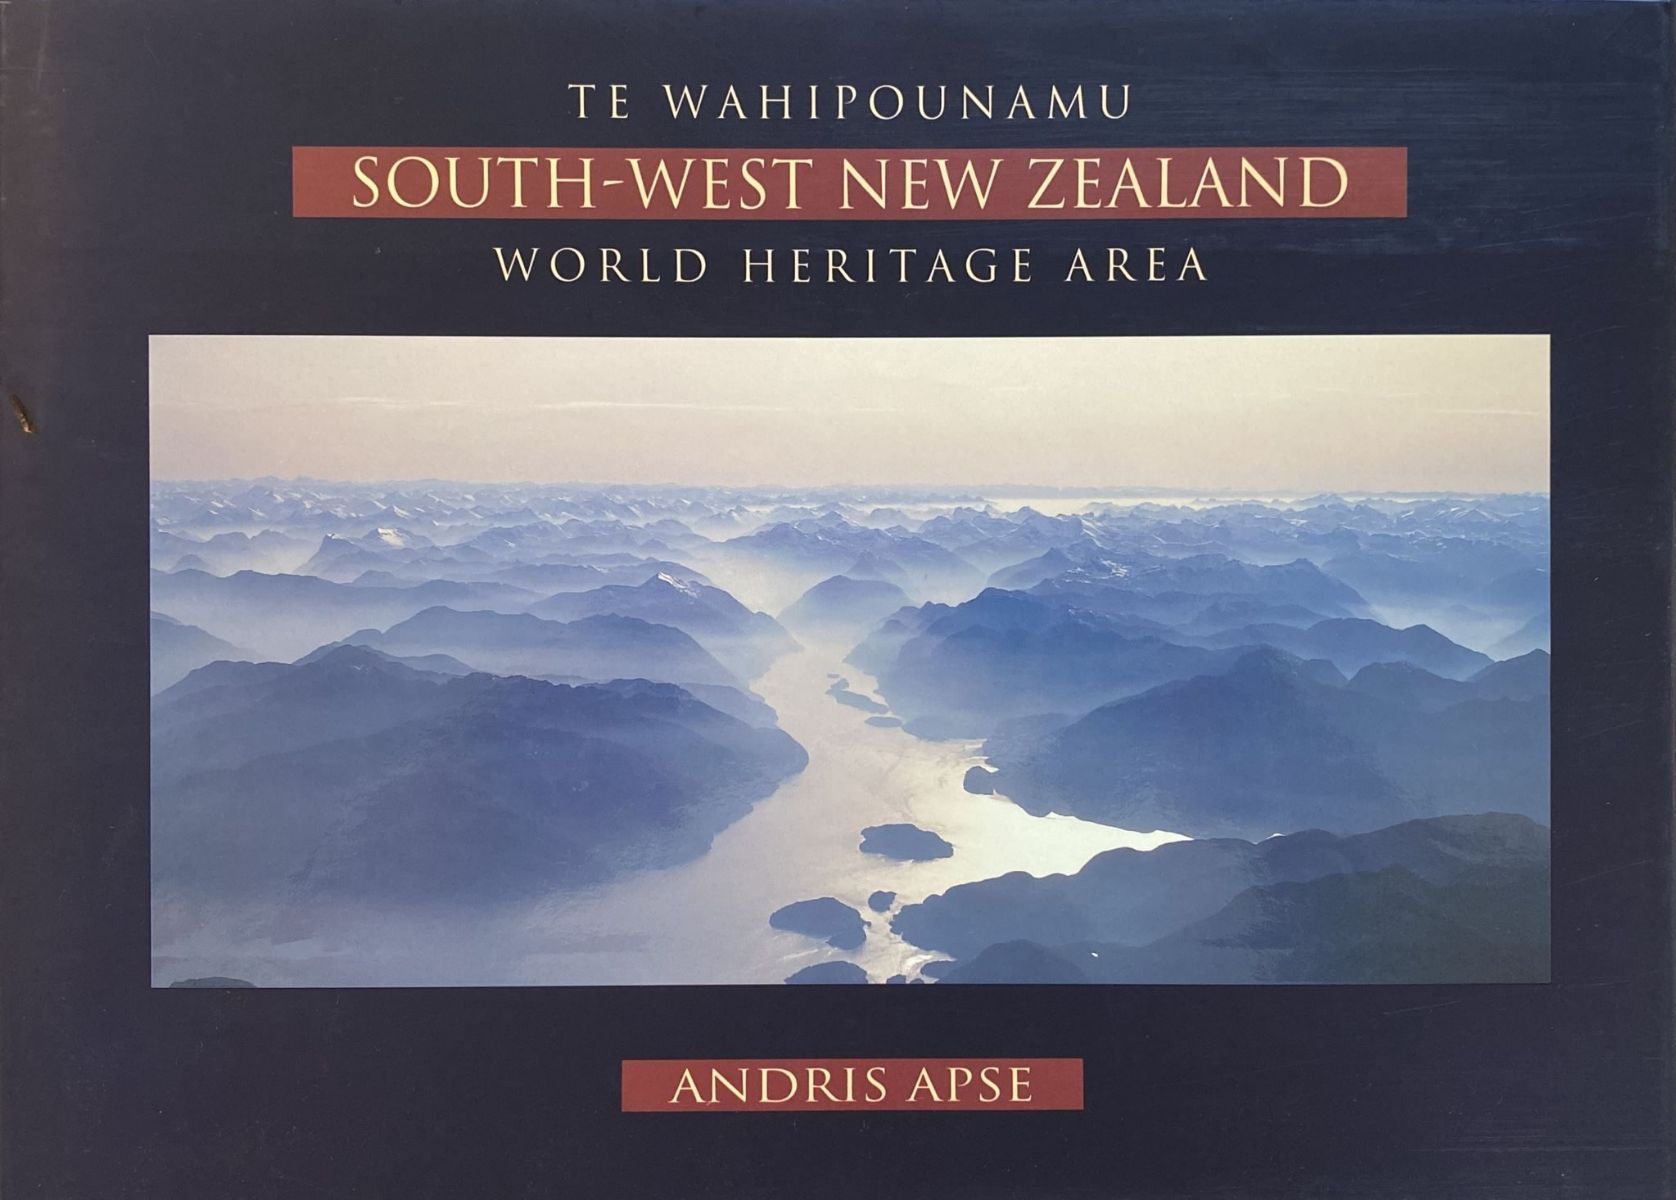 SOUTH-WEST NEW ZEALAND World Heritage Area - Te Wahipounamu